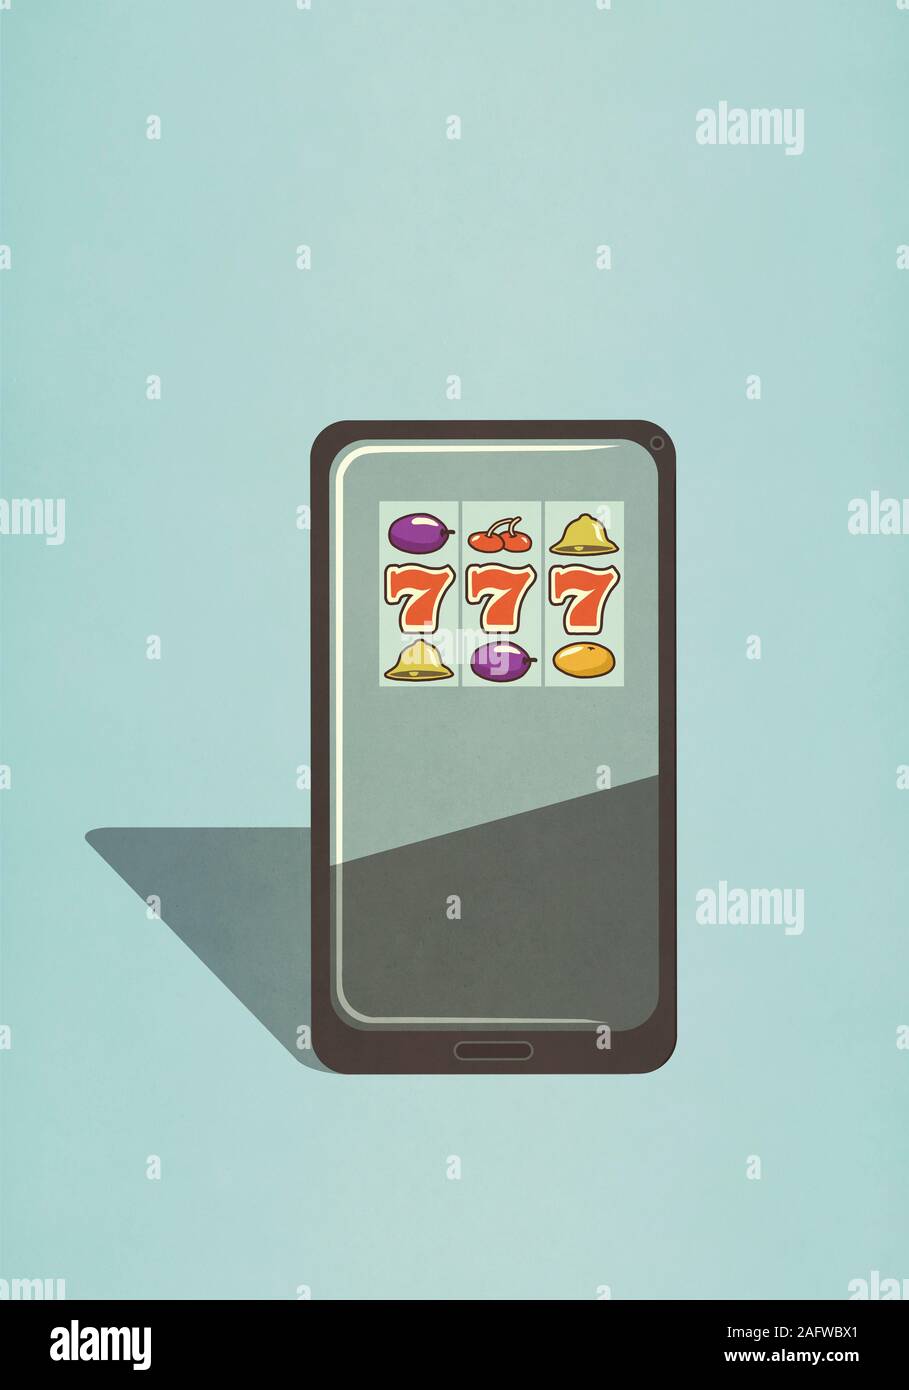 Slot machine game on smart phone screen Stock Photo